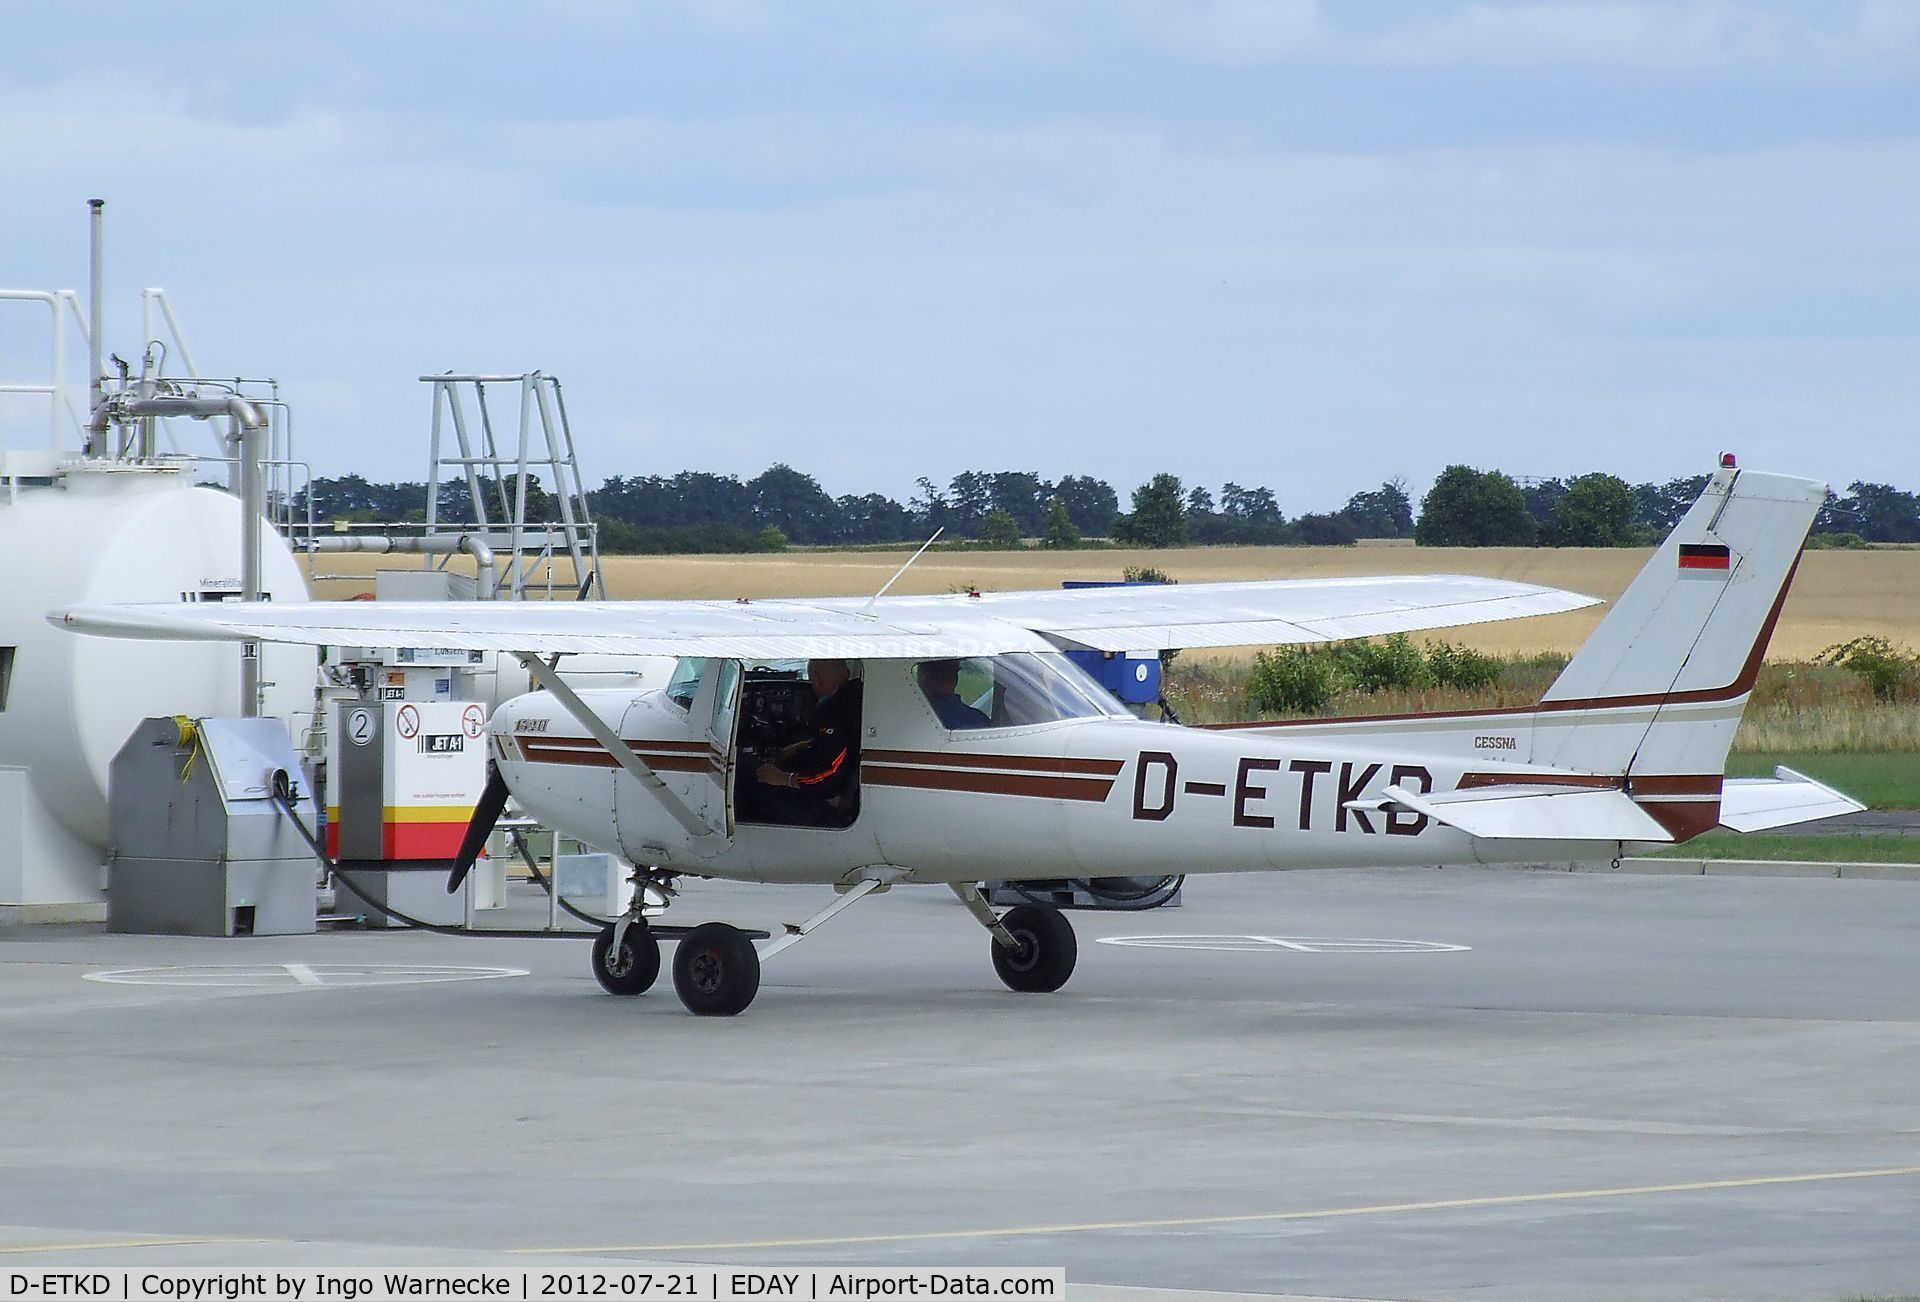 D-ETKD, Cessna 152 II C/N 15285609, Cessna 152 II at Strausberg airfield